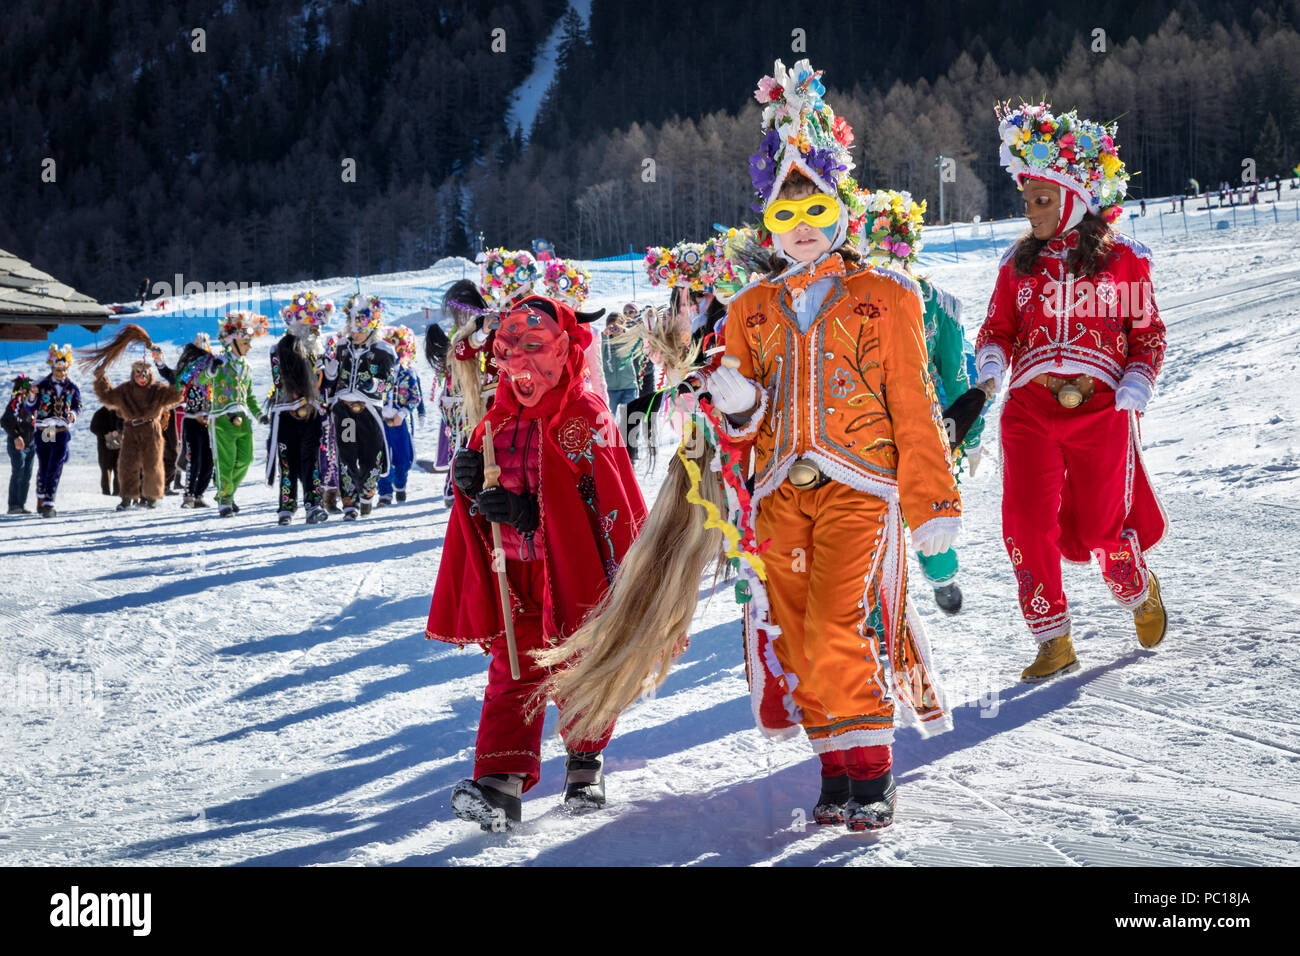 Coumba Freida Carnival, Near Cerisey, Great St. Bernard Valley, Aosta, Italy Stock Photo